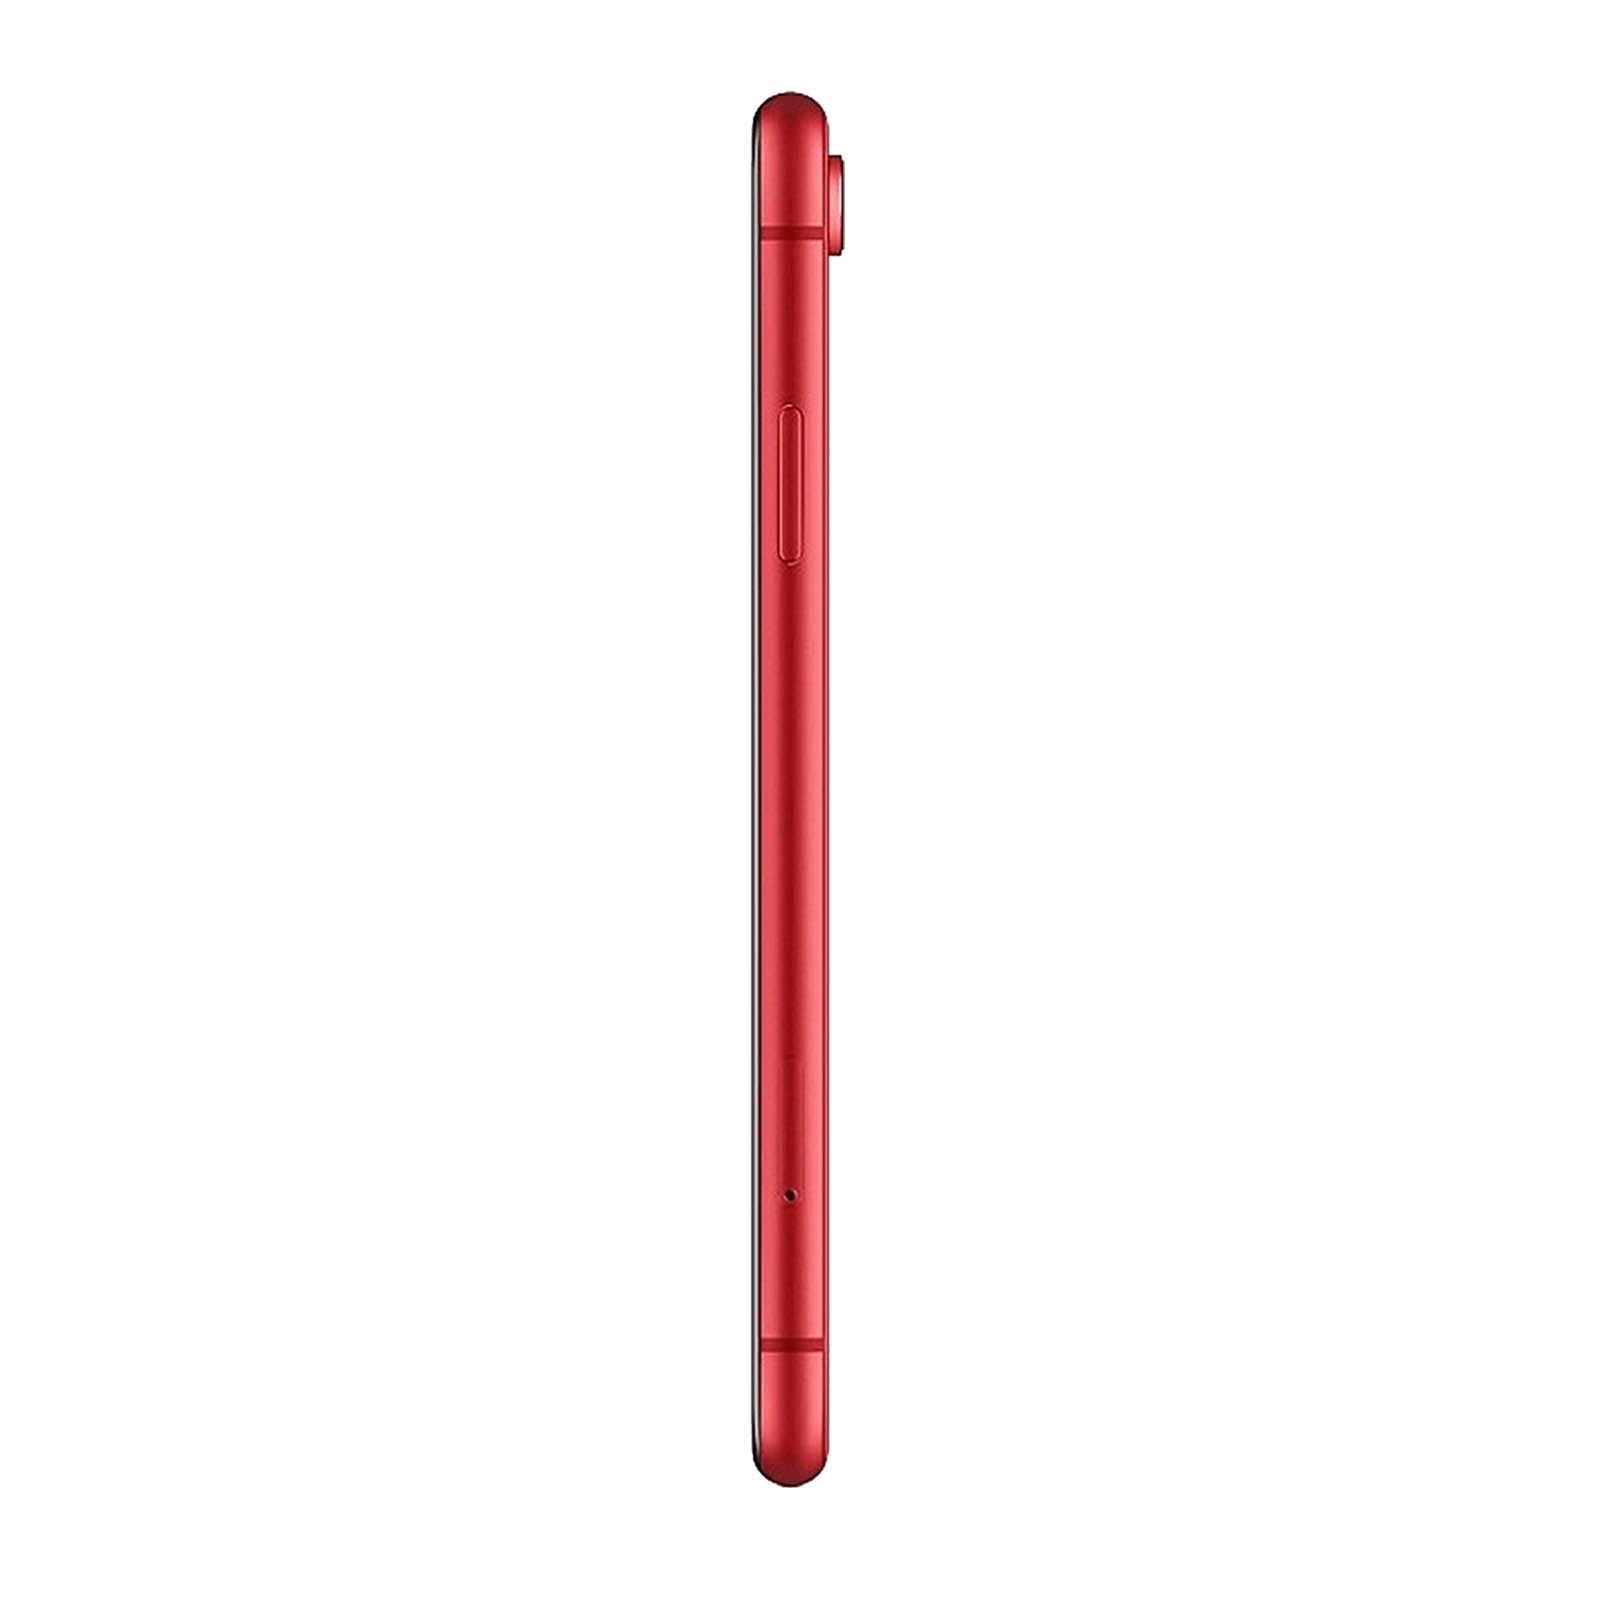 Apple iPhone XR 128GB Product Red Fair - Verizon